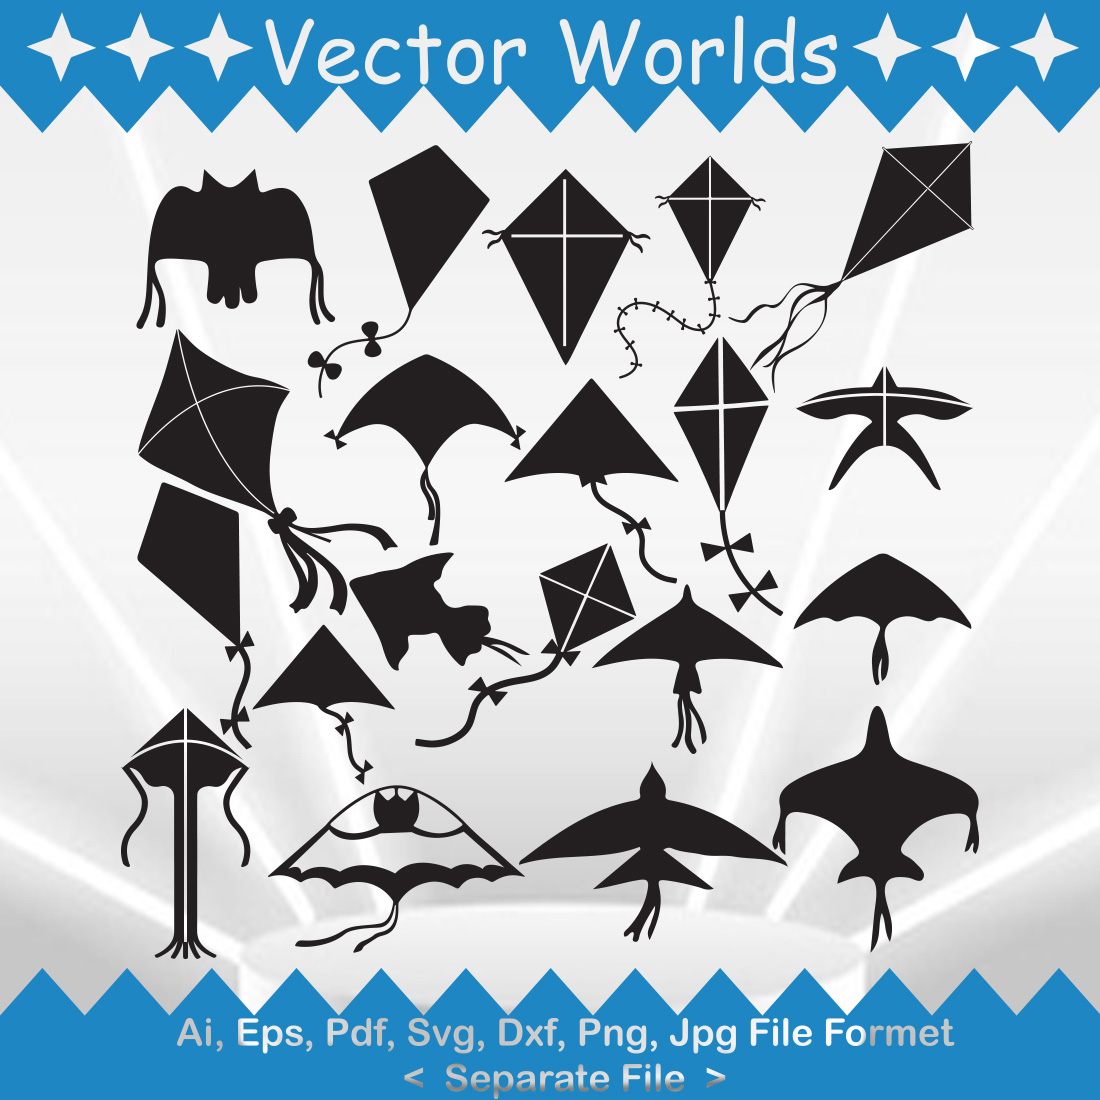 Kite SVG Vector Design cover image.